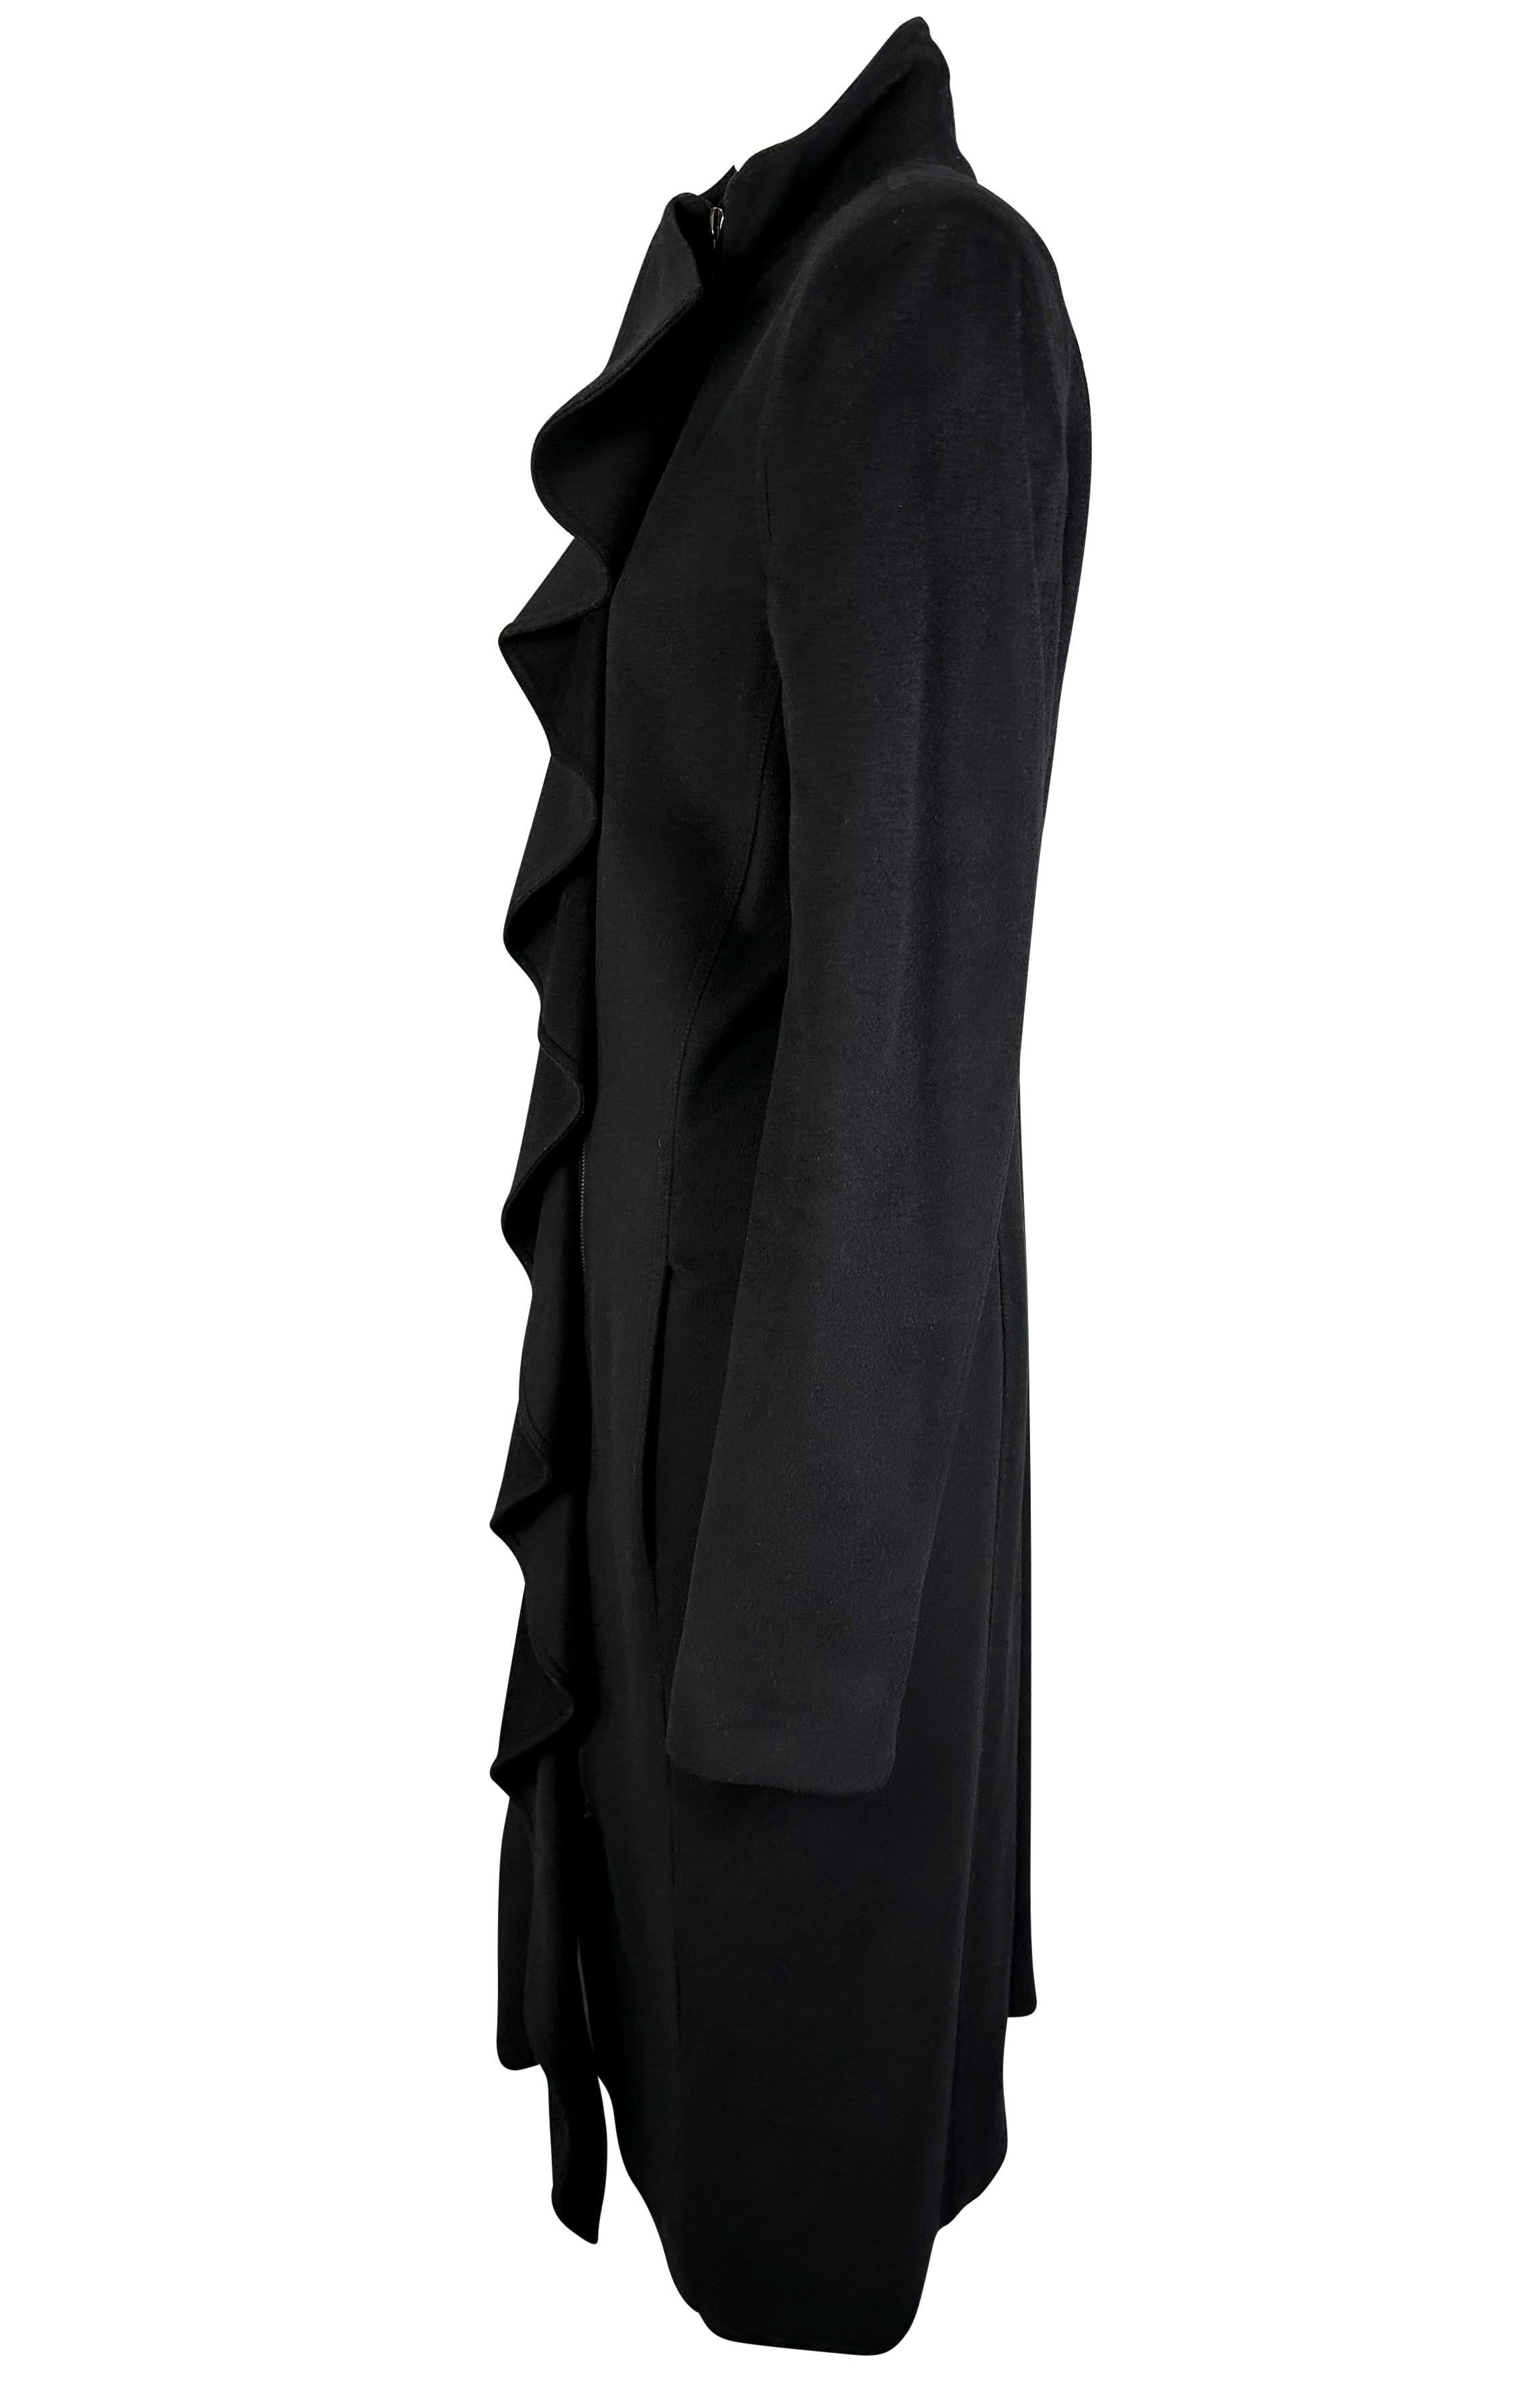 F/W 2003 Yves Saint Laurent by Tom Ford Runway Ruffle Overcoat Black For Sale 1